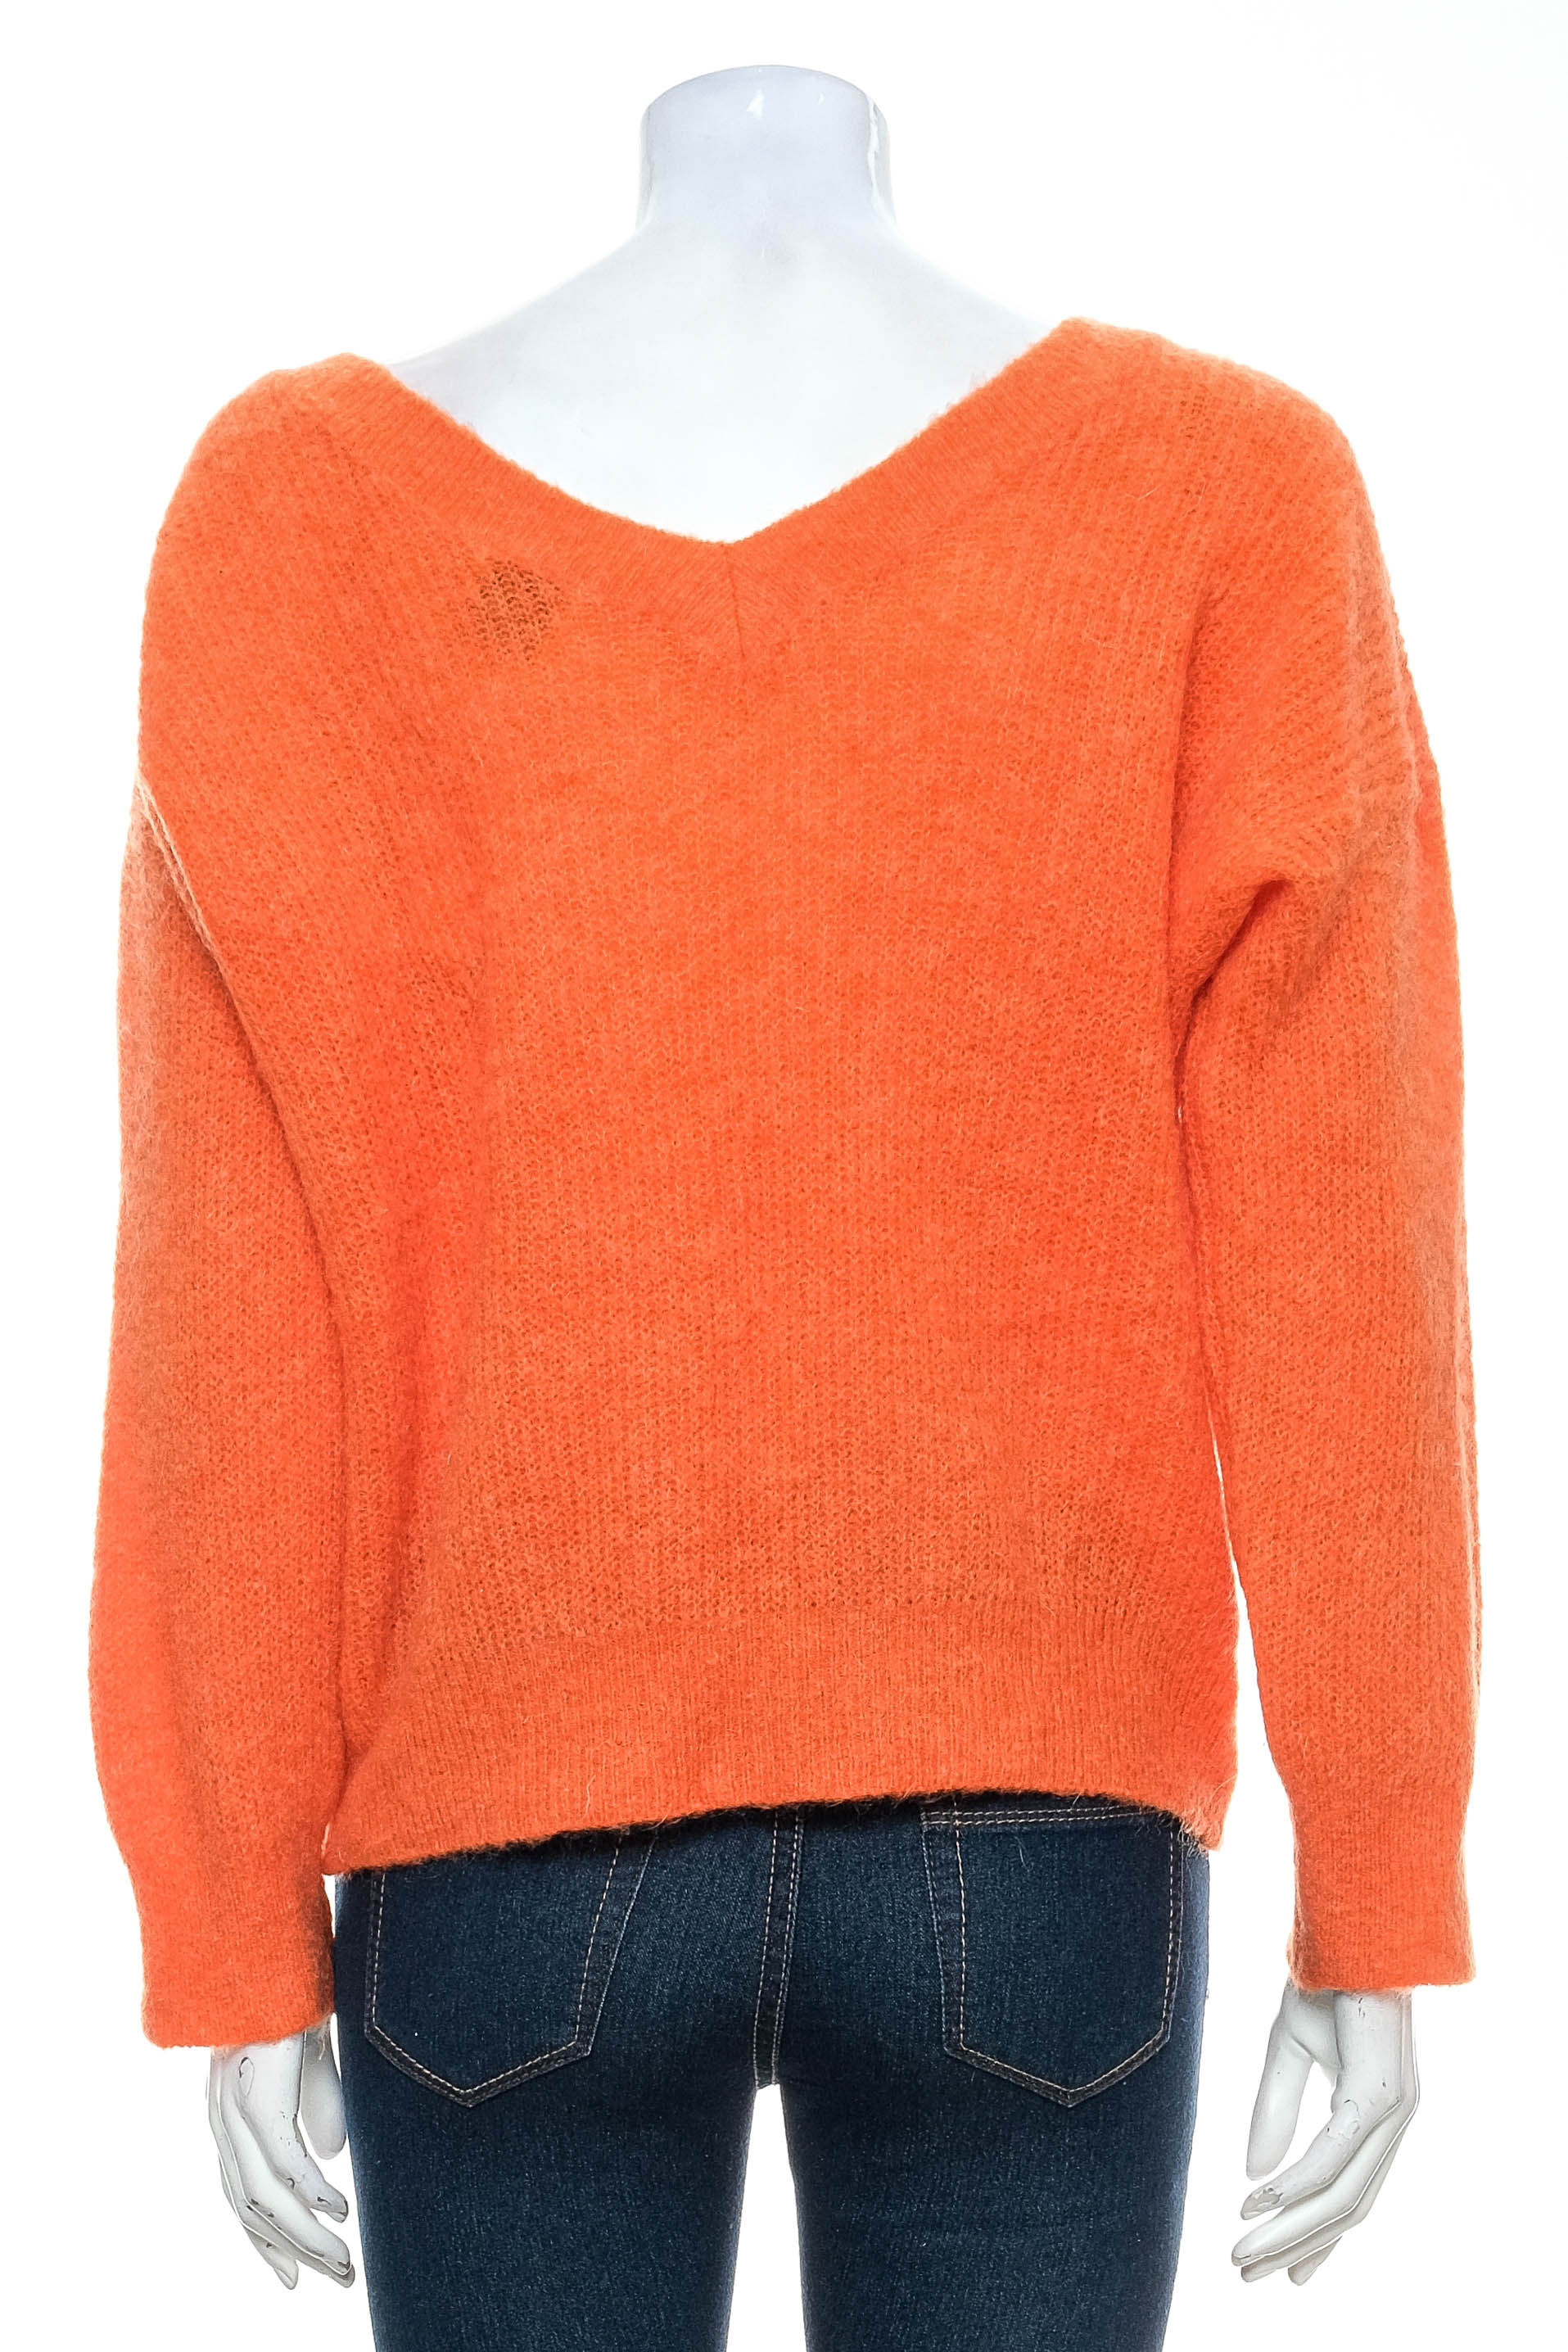 Women's sweater - TERRA DI SIENA - 1